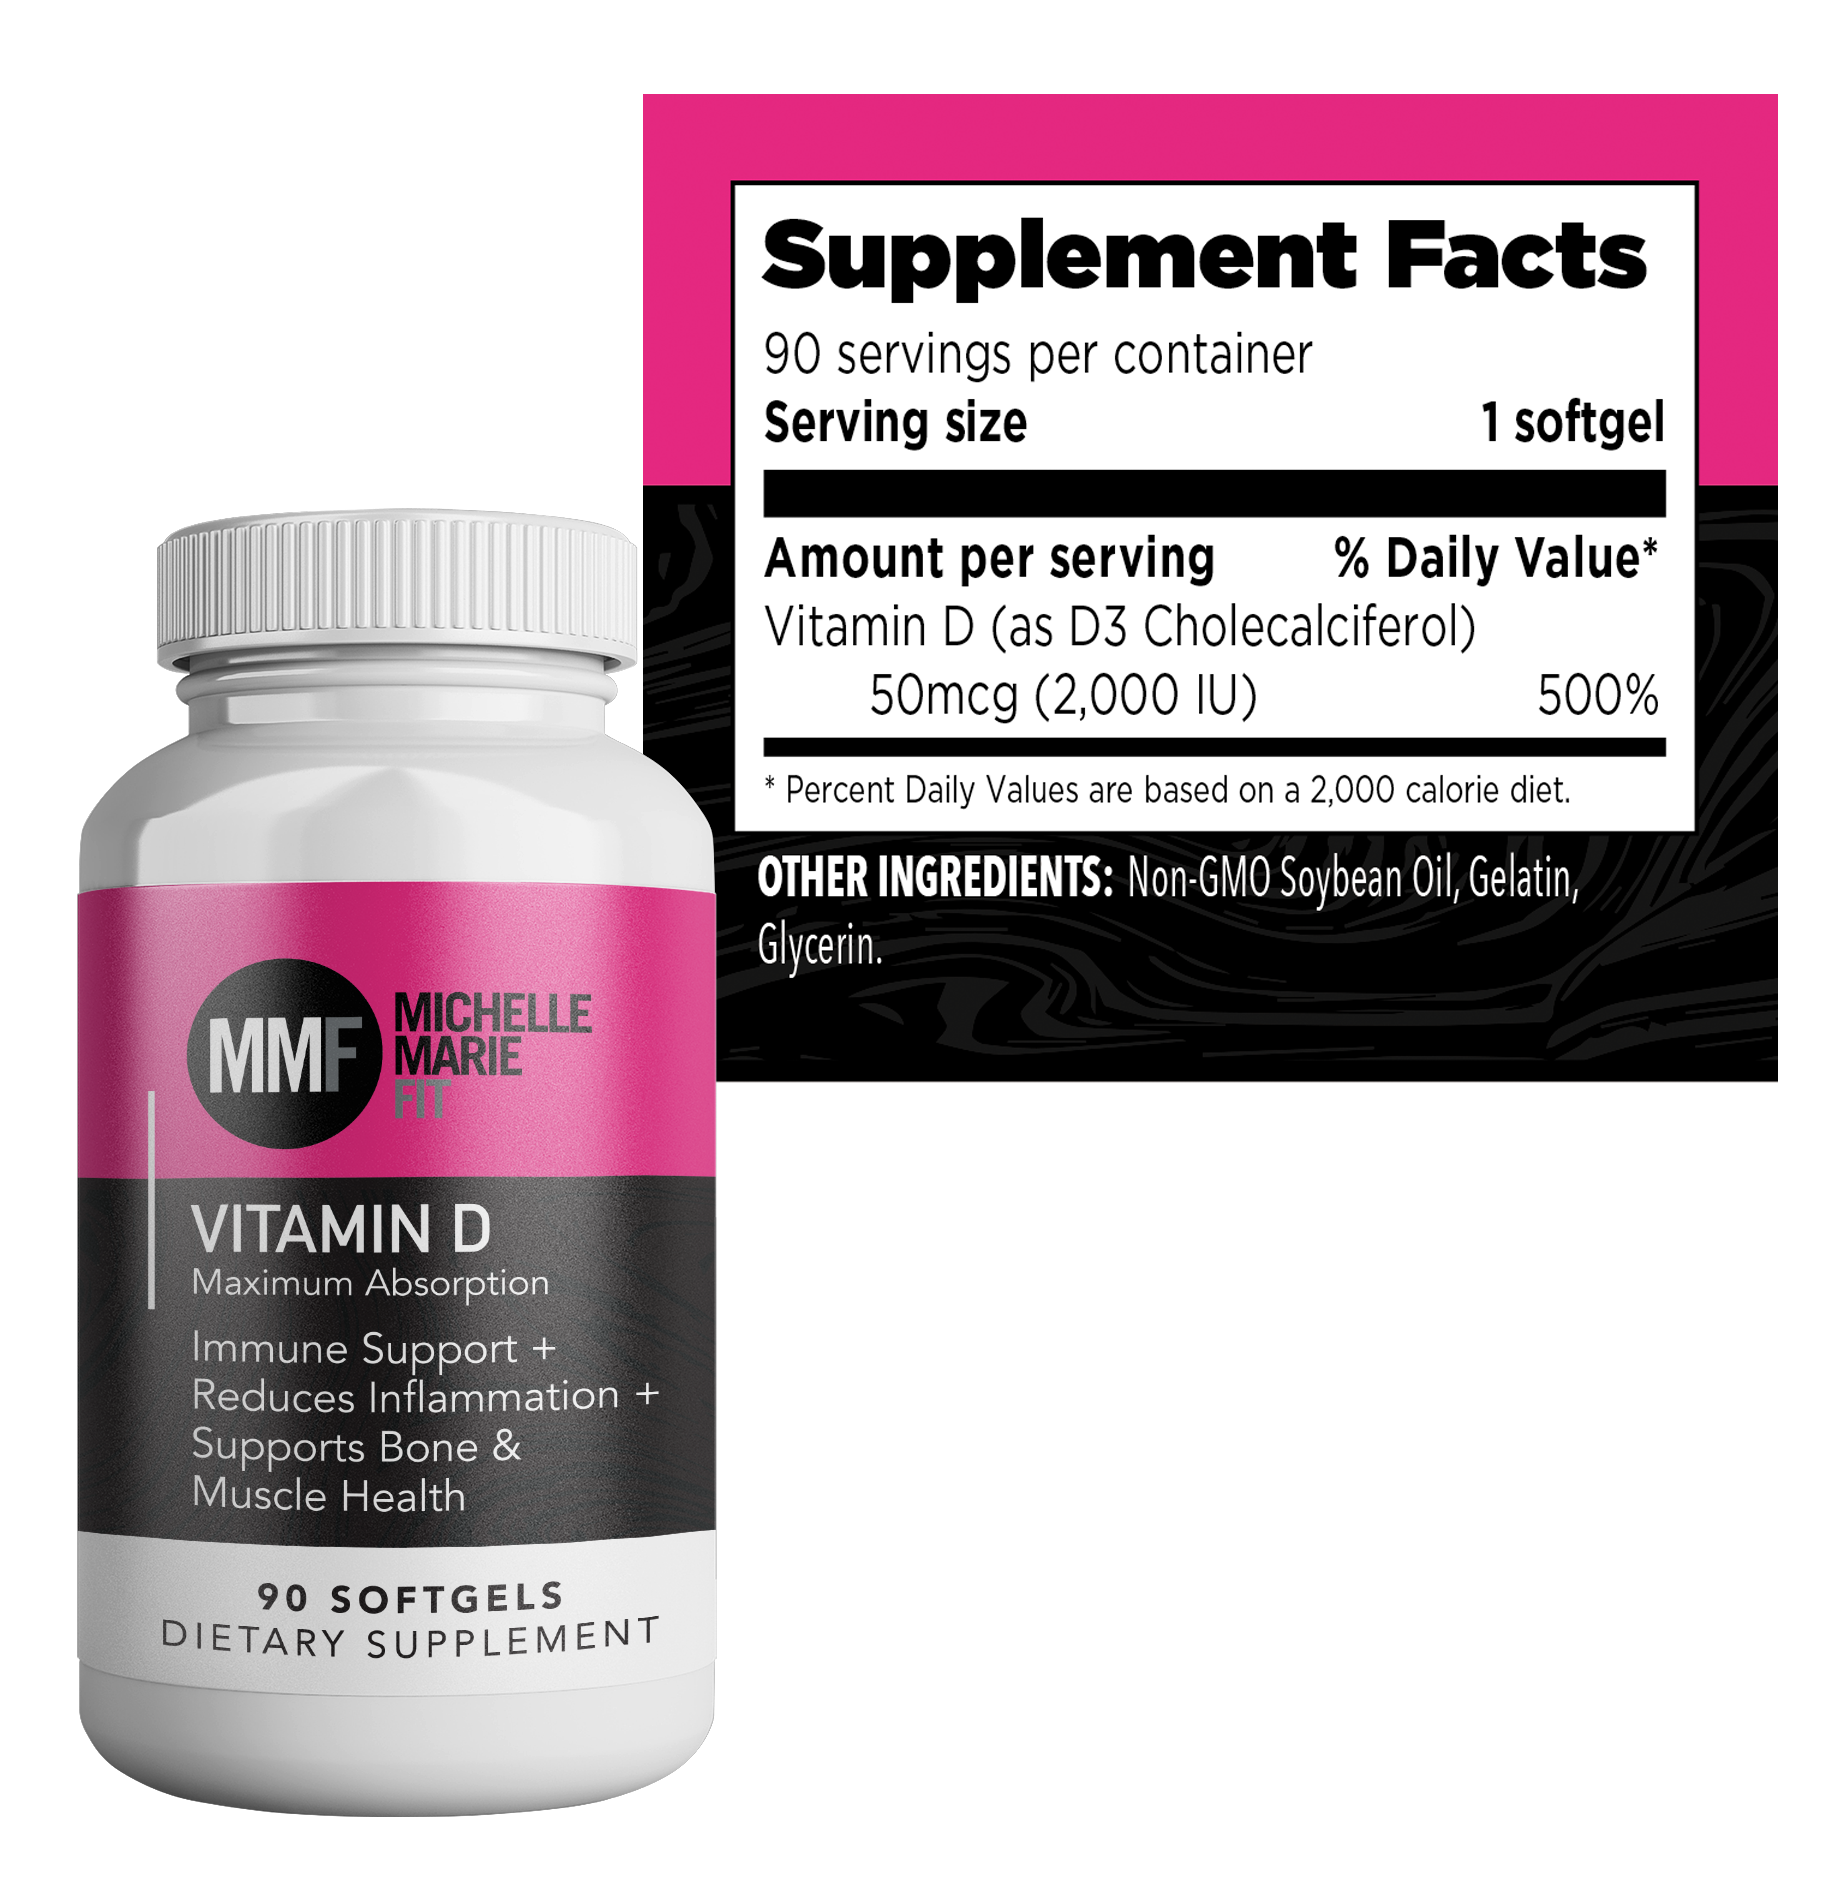 Vitamin D Supplement Facts